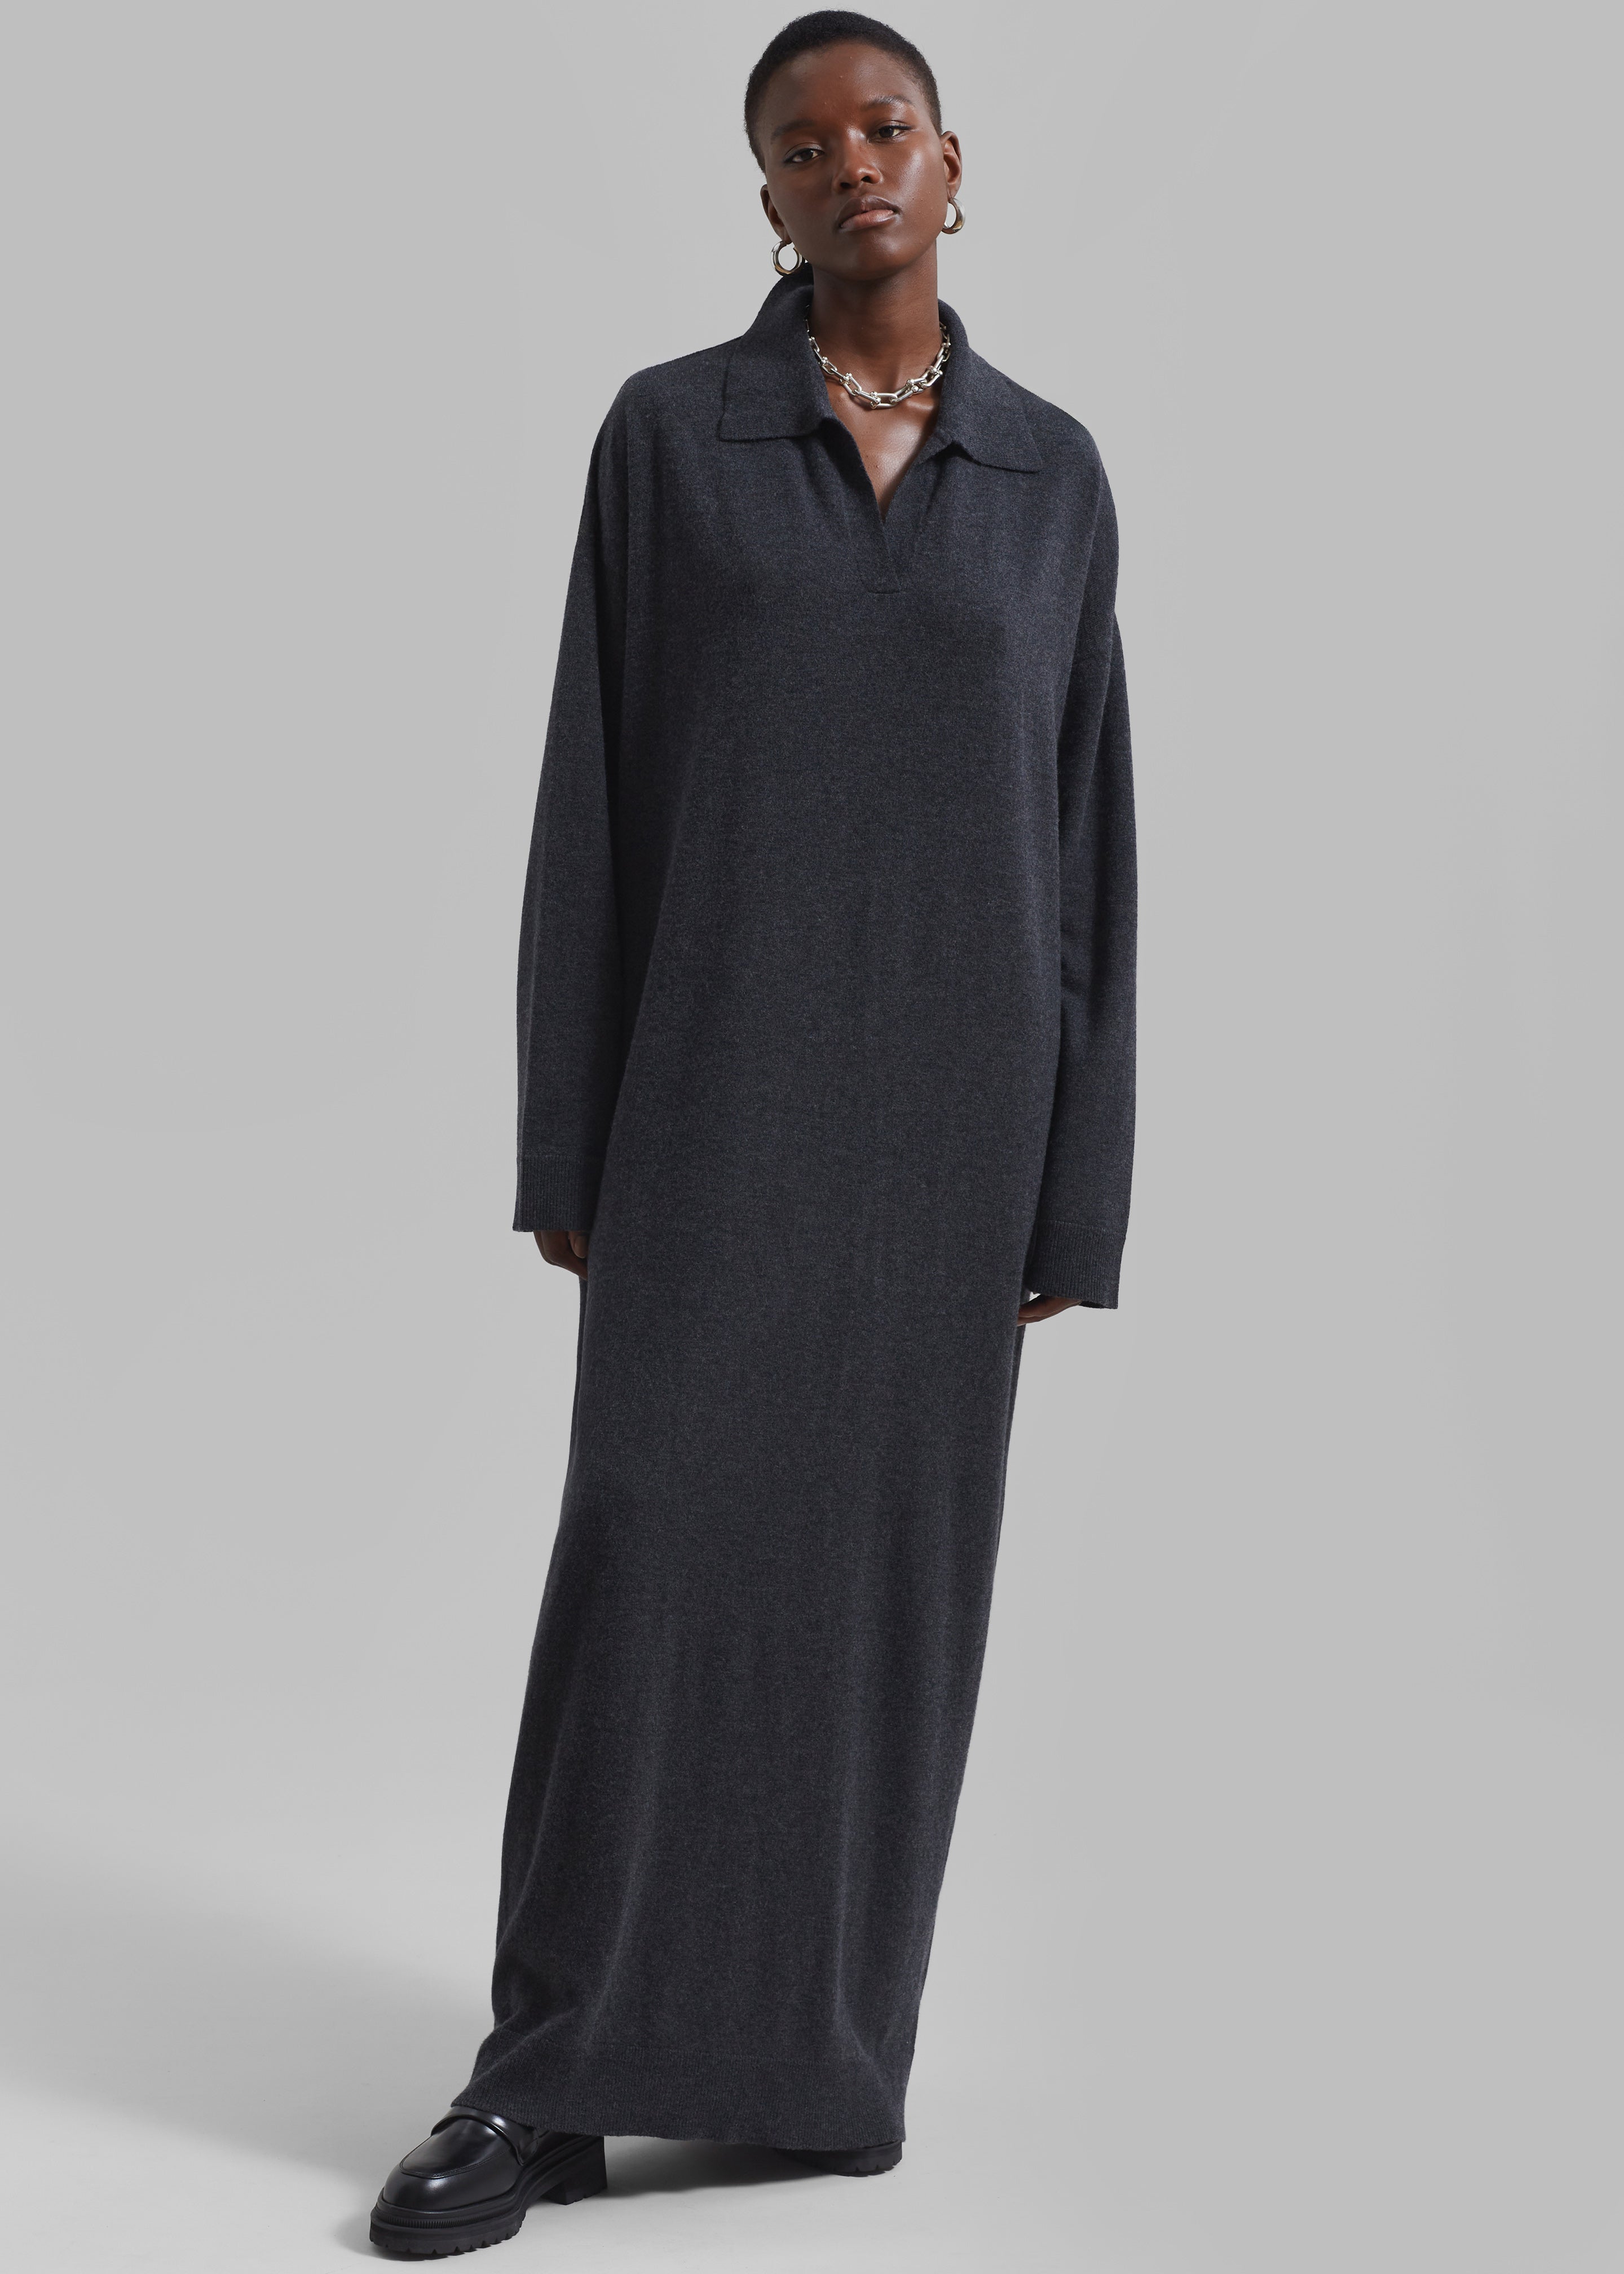 Siobhan Long Knit Dress - Charcoal - 3